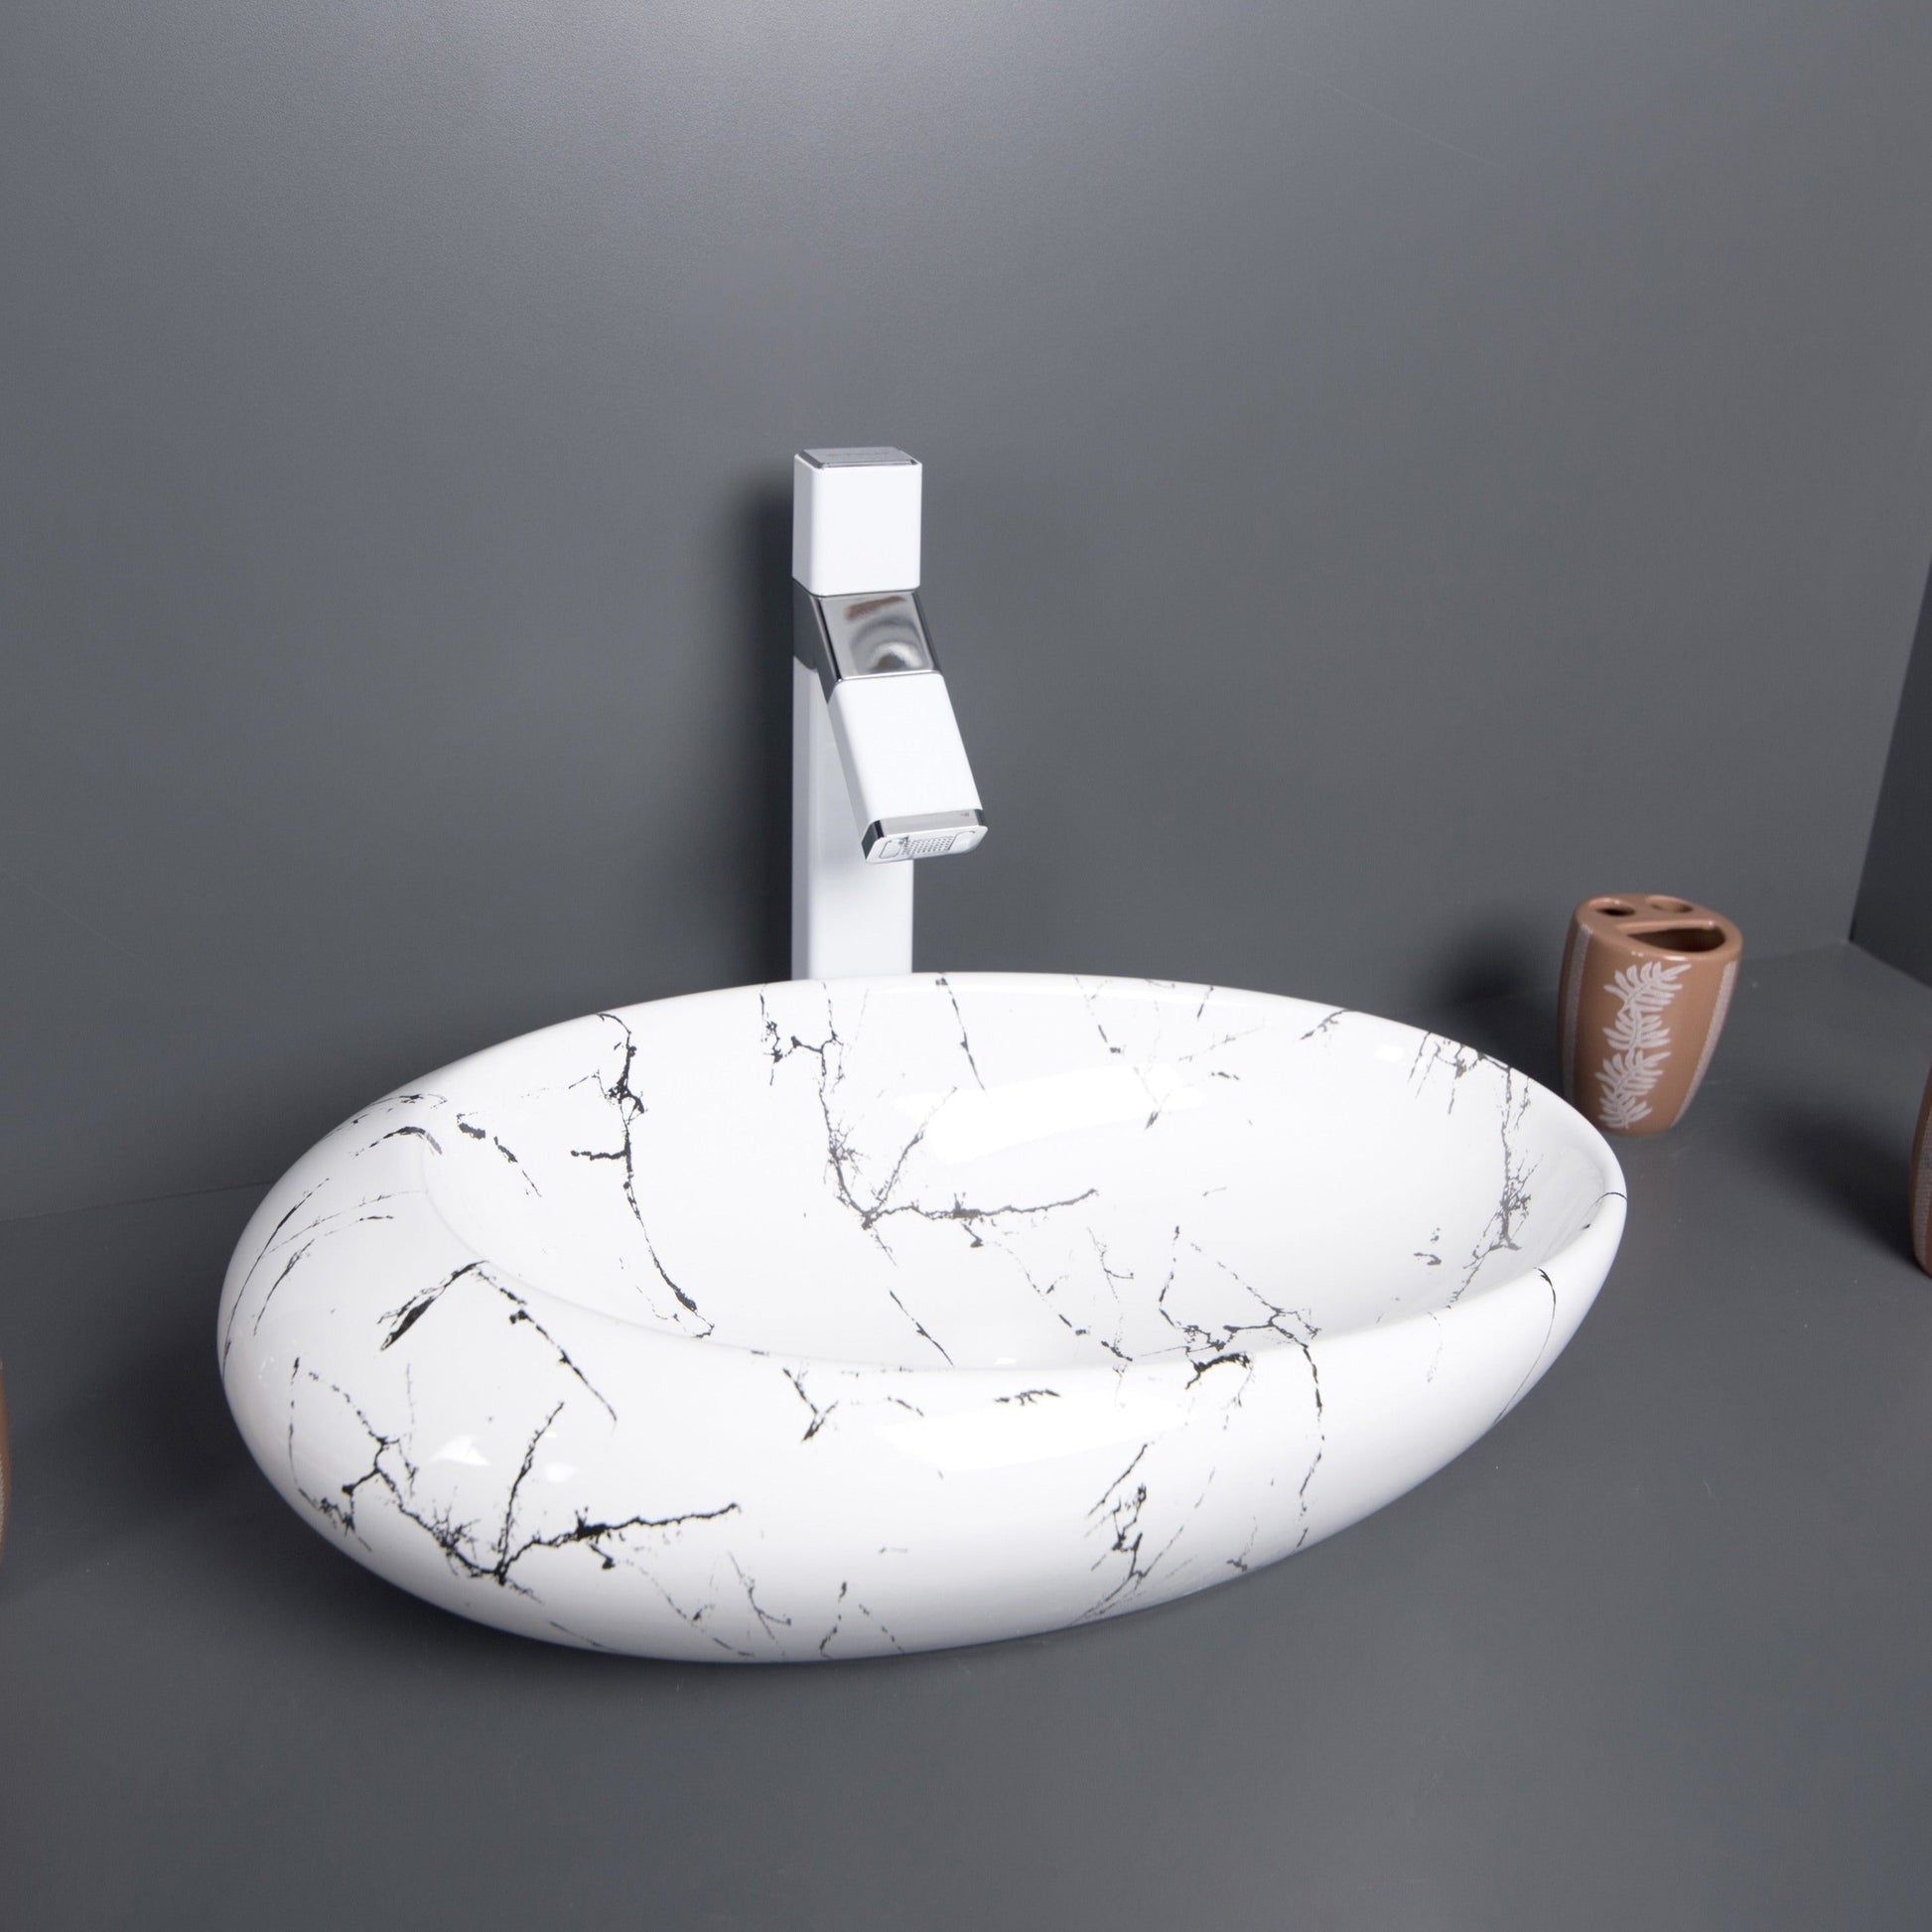 inart ceramic sanitaryware wash basin white marble oval shape 20x14 inch